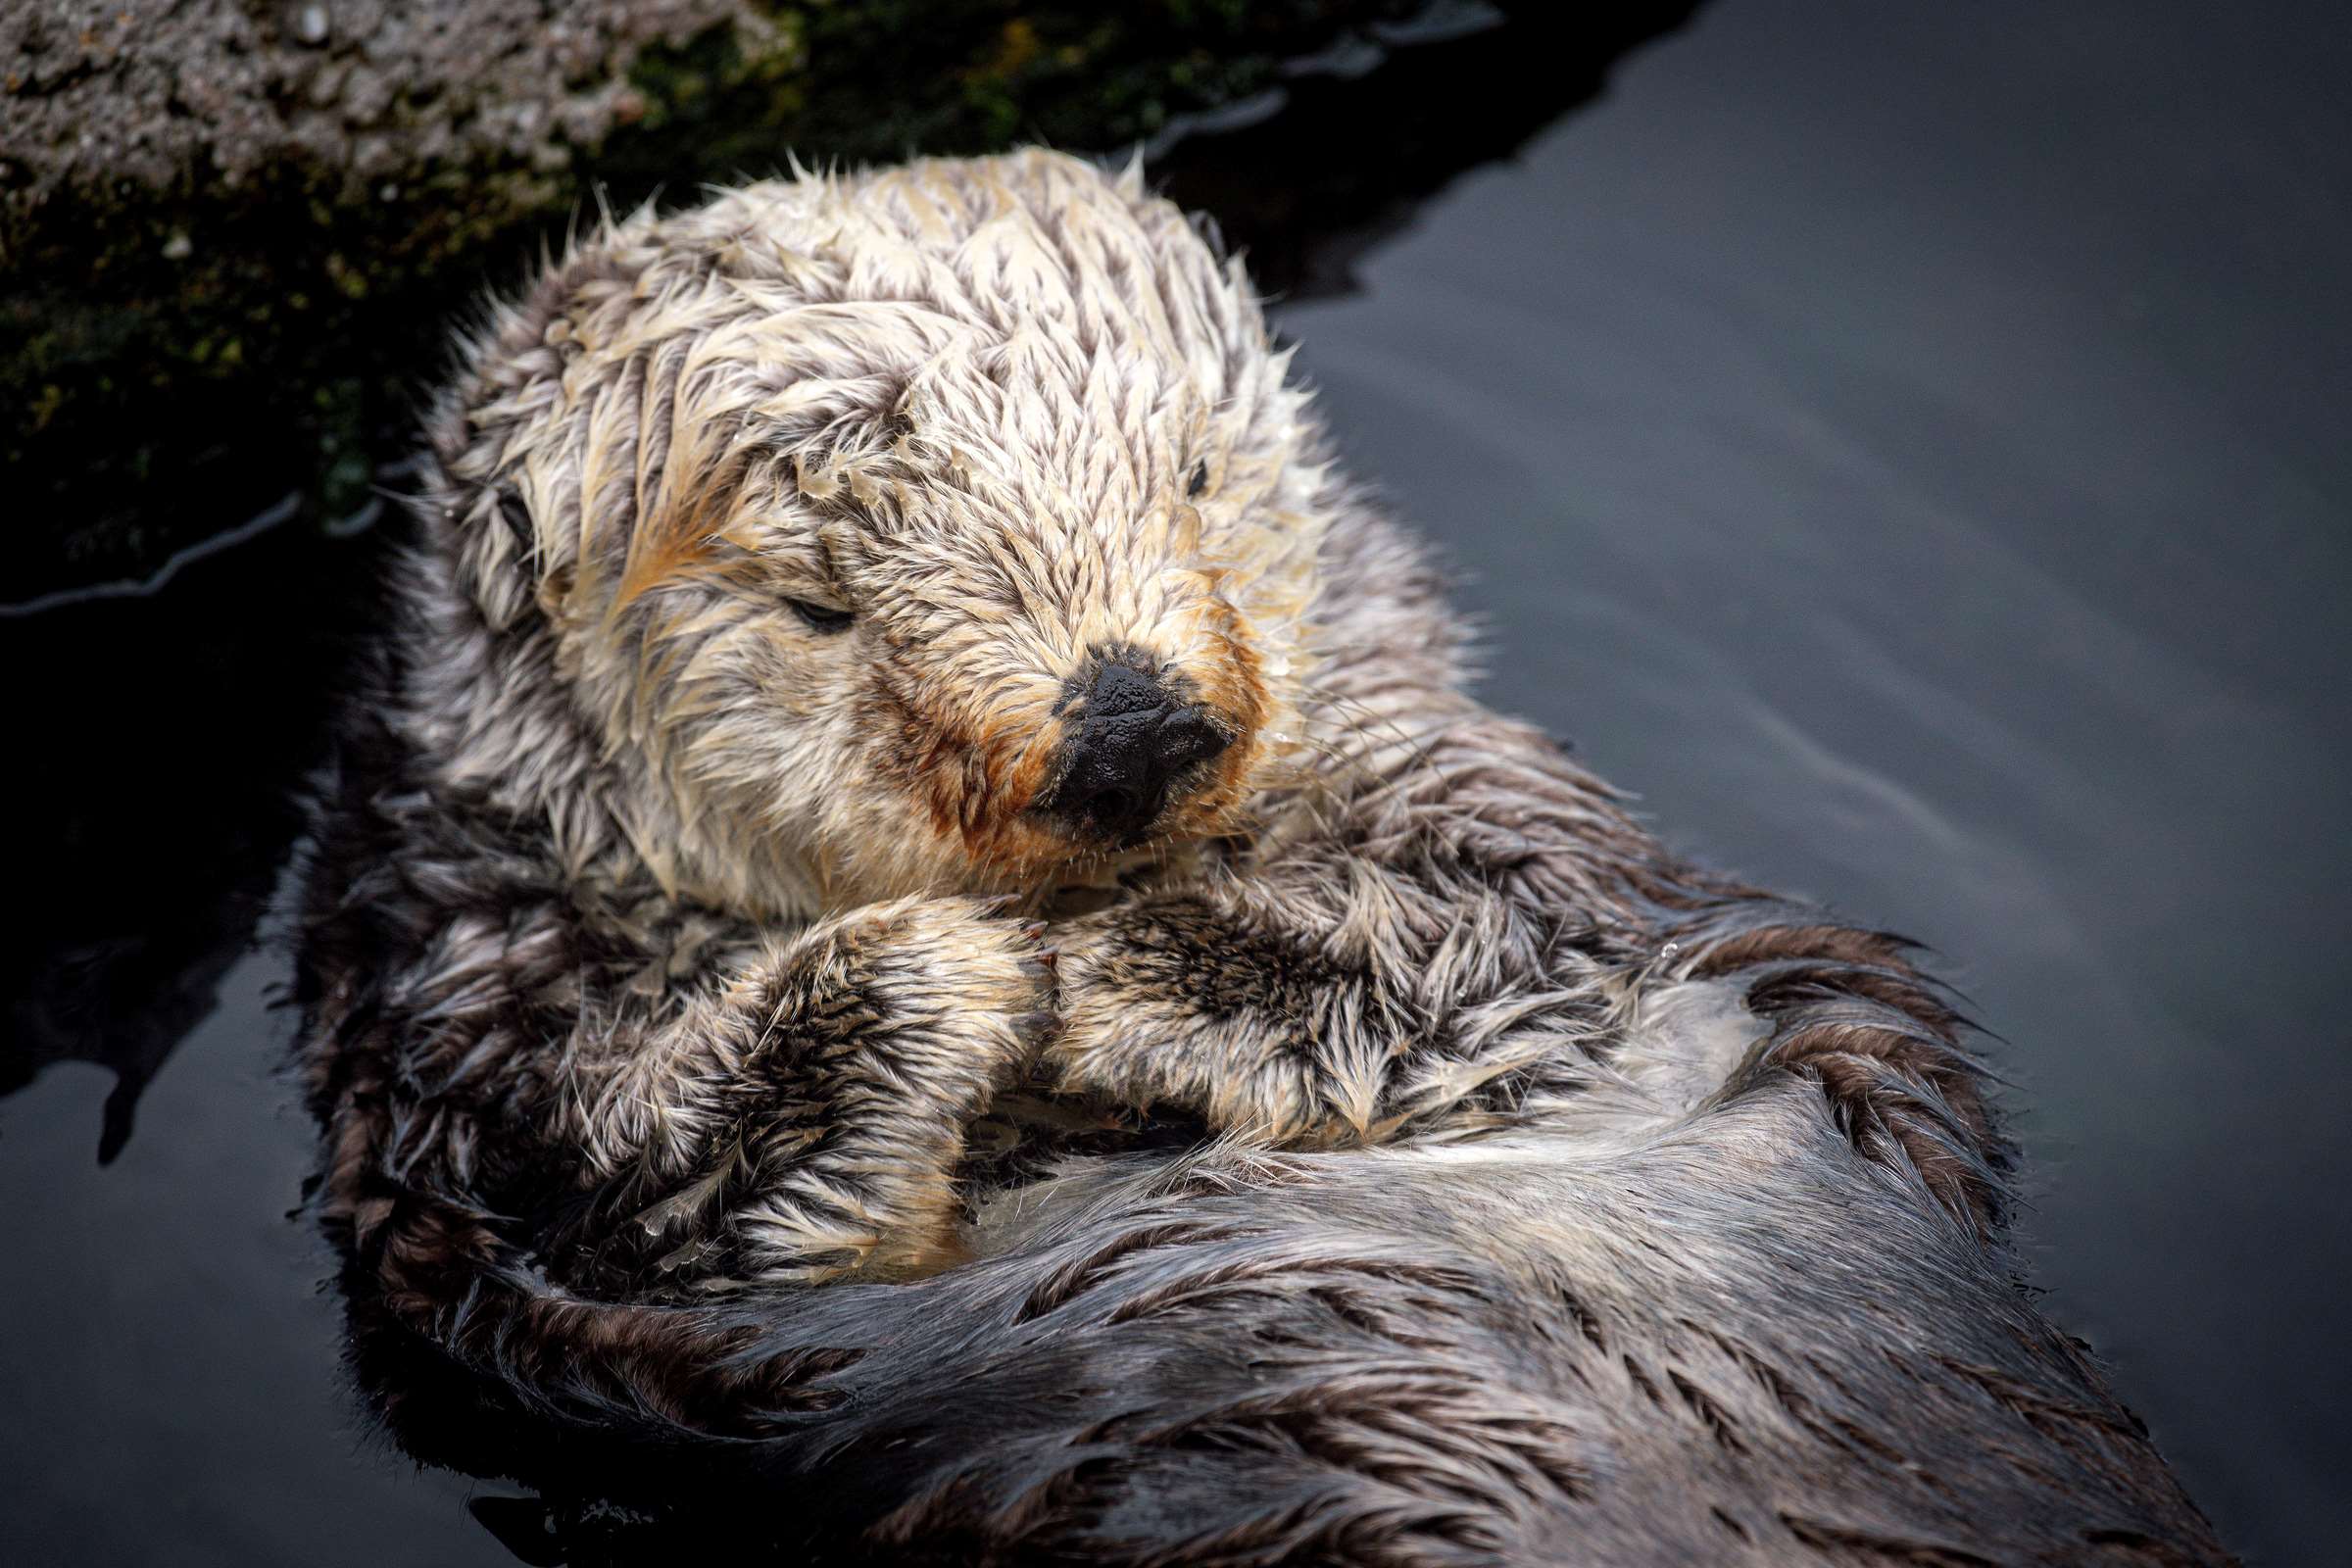 Sea otter Rosa wallpaper from the Monterey Bay Aquarium